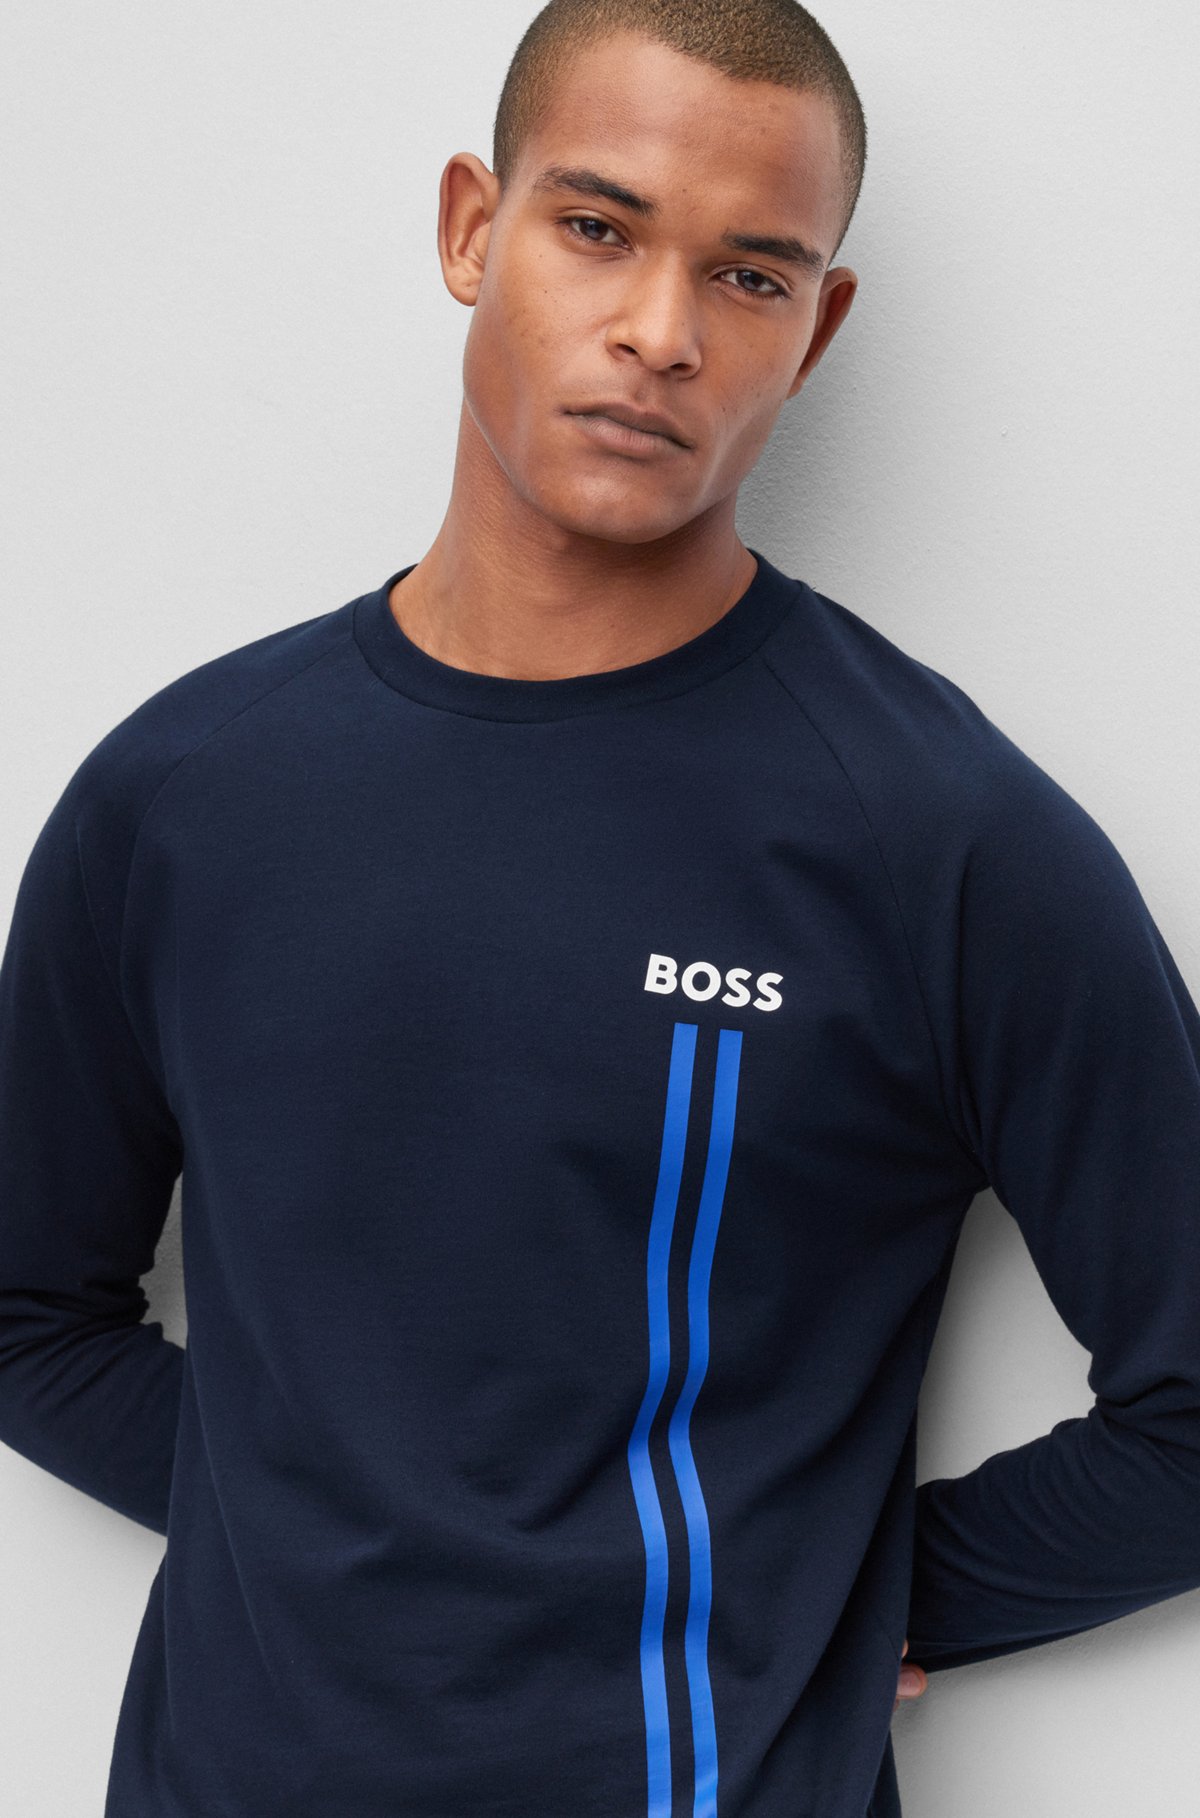 Cotton-terry sweatshirt with logo and stripe prints, Dark Blue